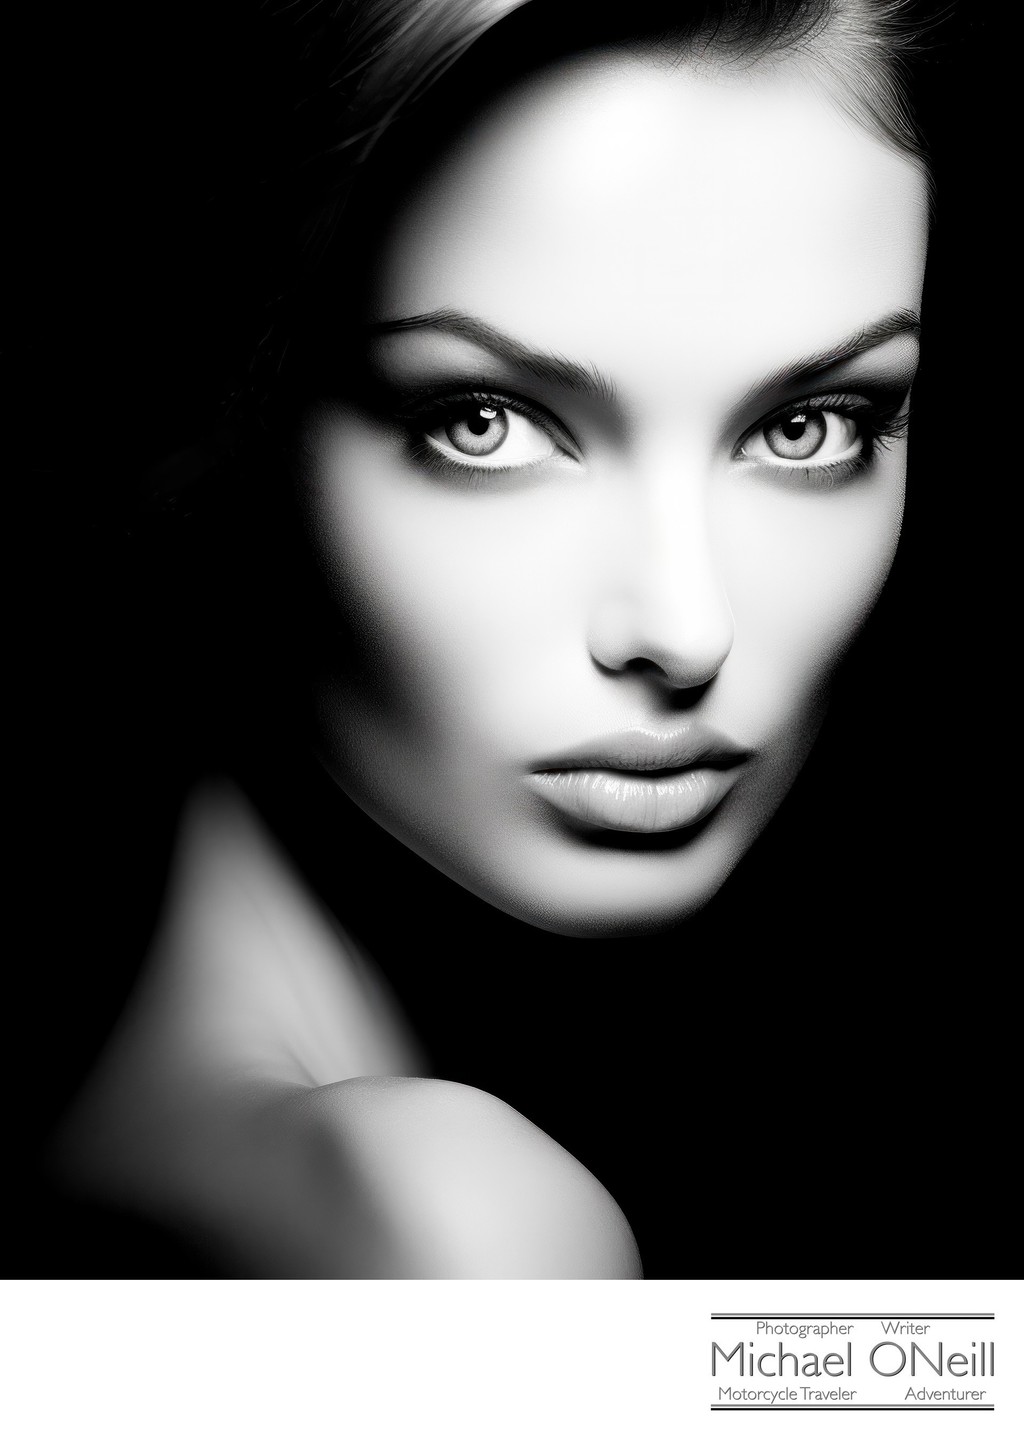 Stunning High Contrast Black And White Female Fashion Model's Headshot Portrait